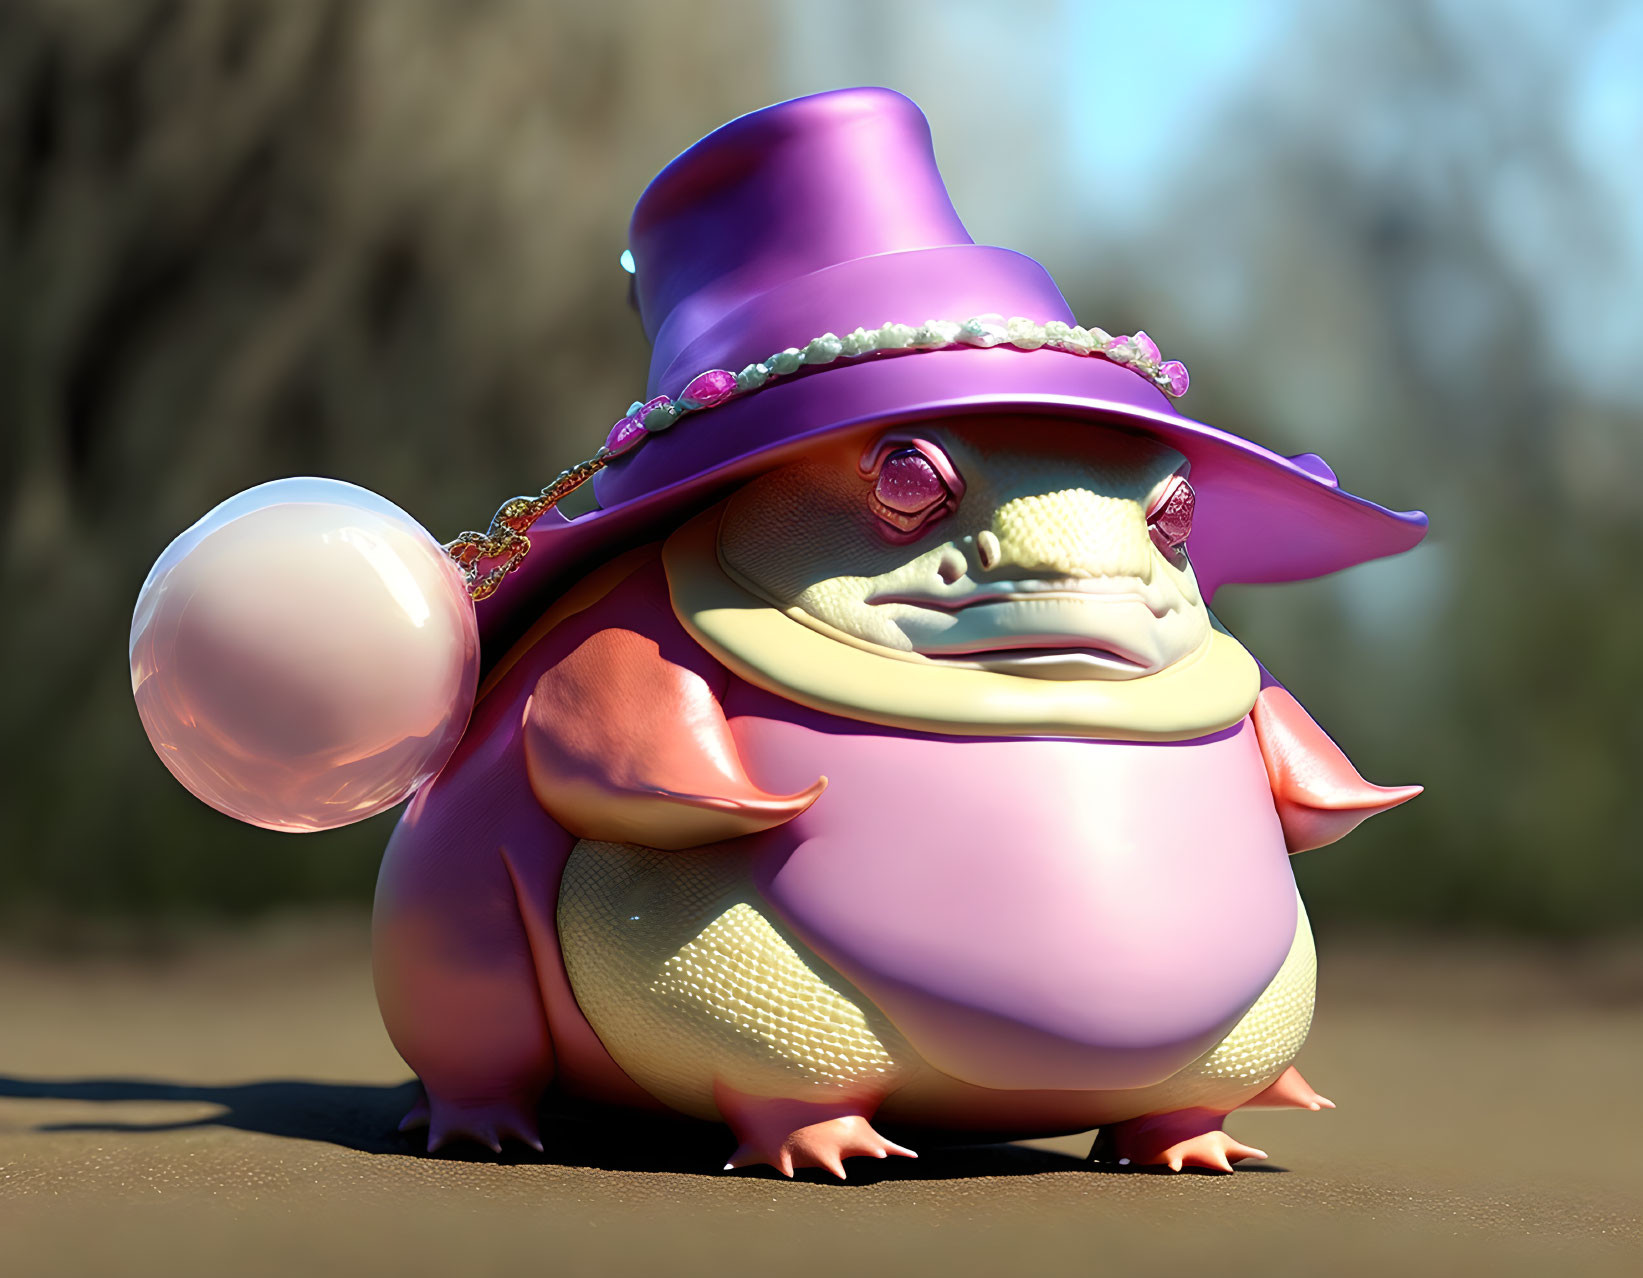 Cartoon Frog in Purple Top Hat Blowing Bubble Outdoors